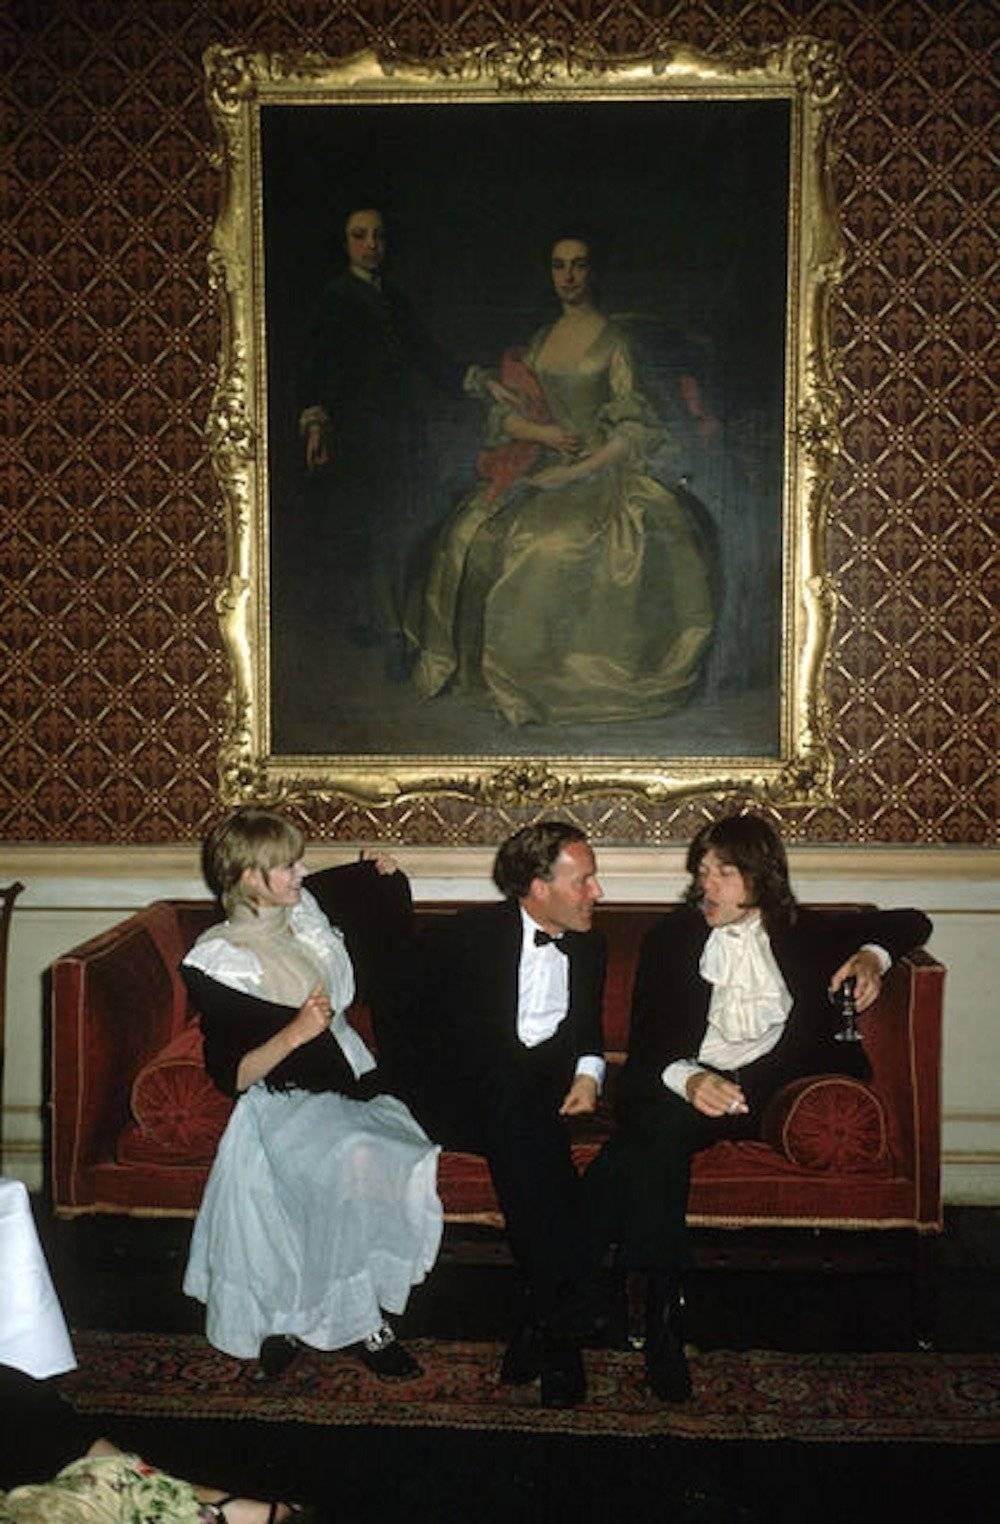 Color Photograph Slim Aarons - dition de succession emblmatique, Pop and Society, Mick Jagger et Marianne Faithfull